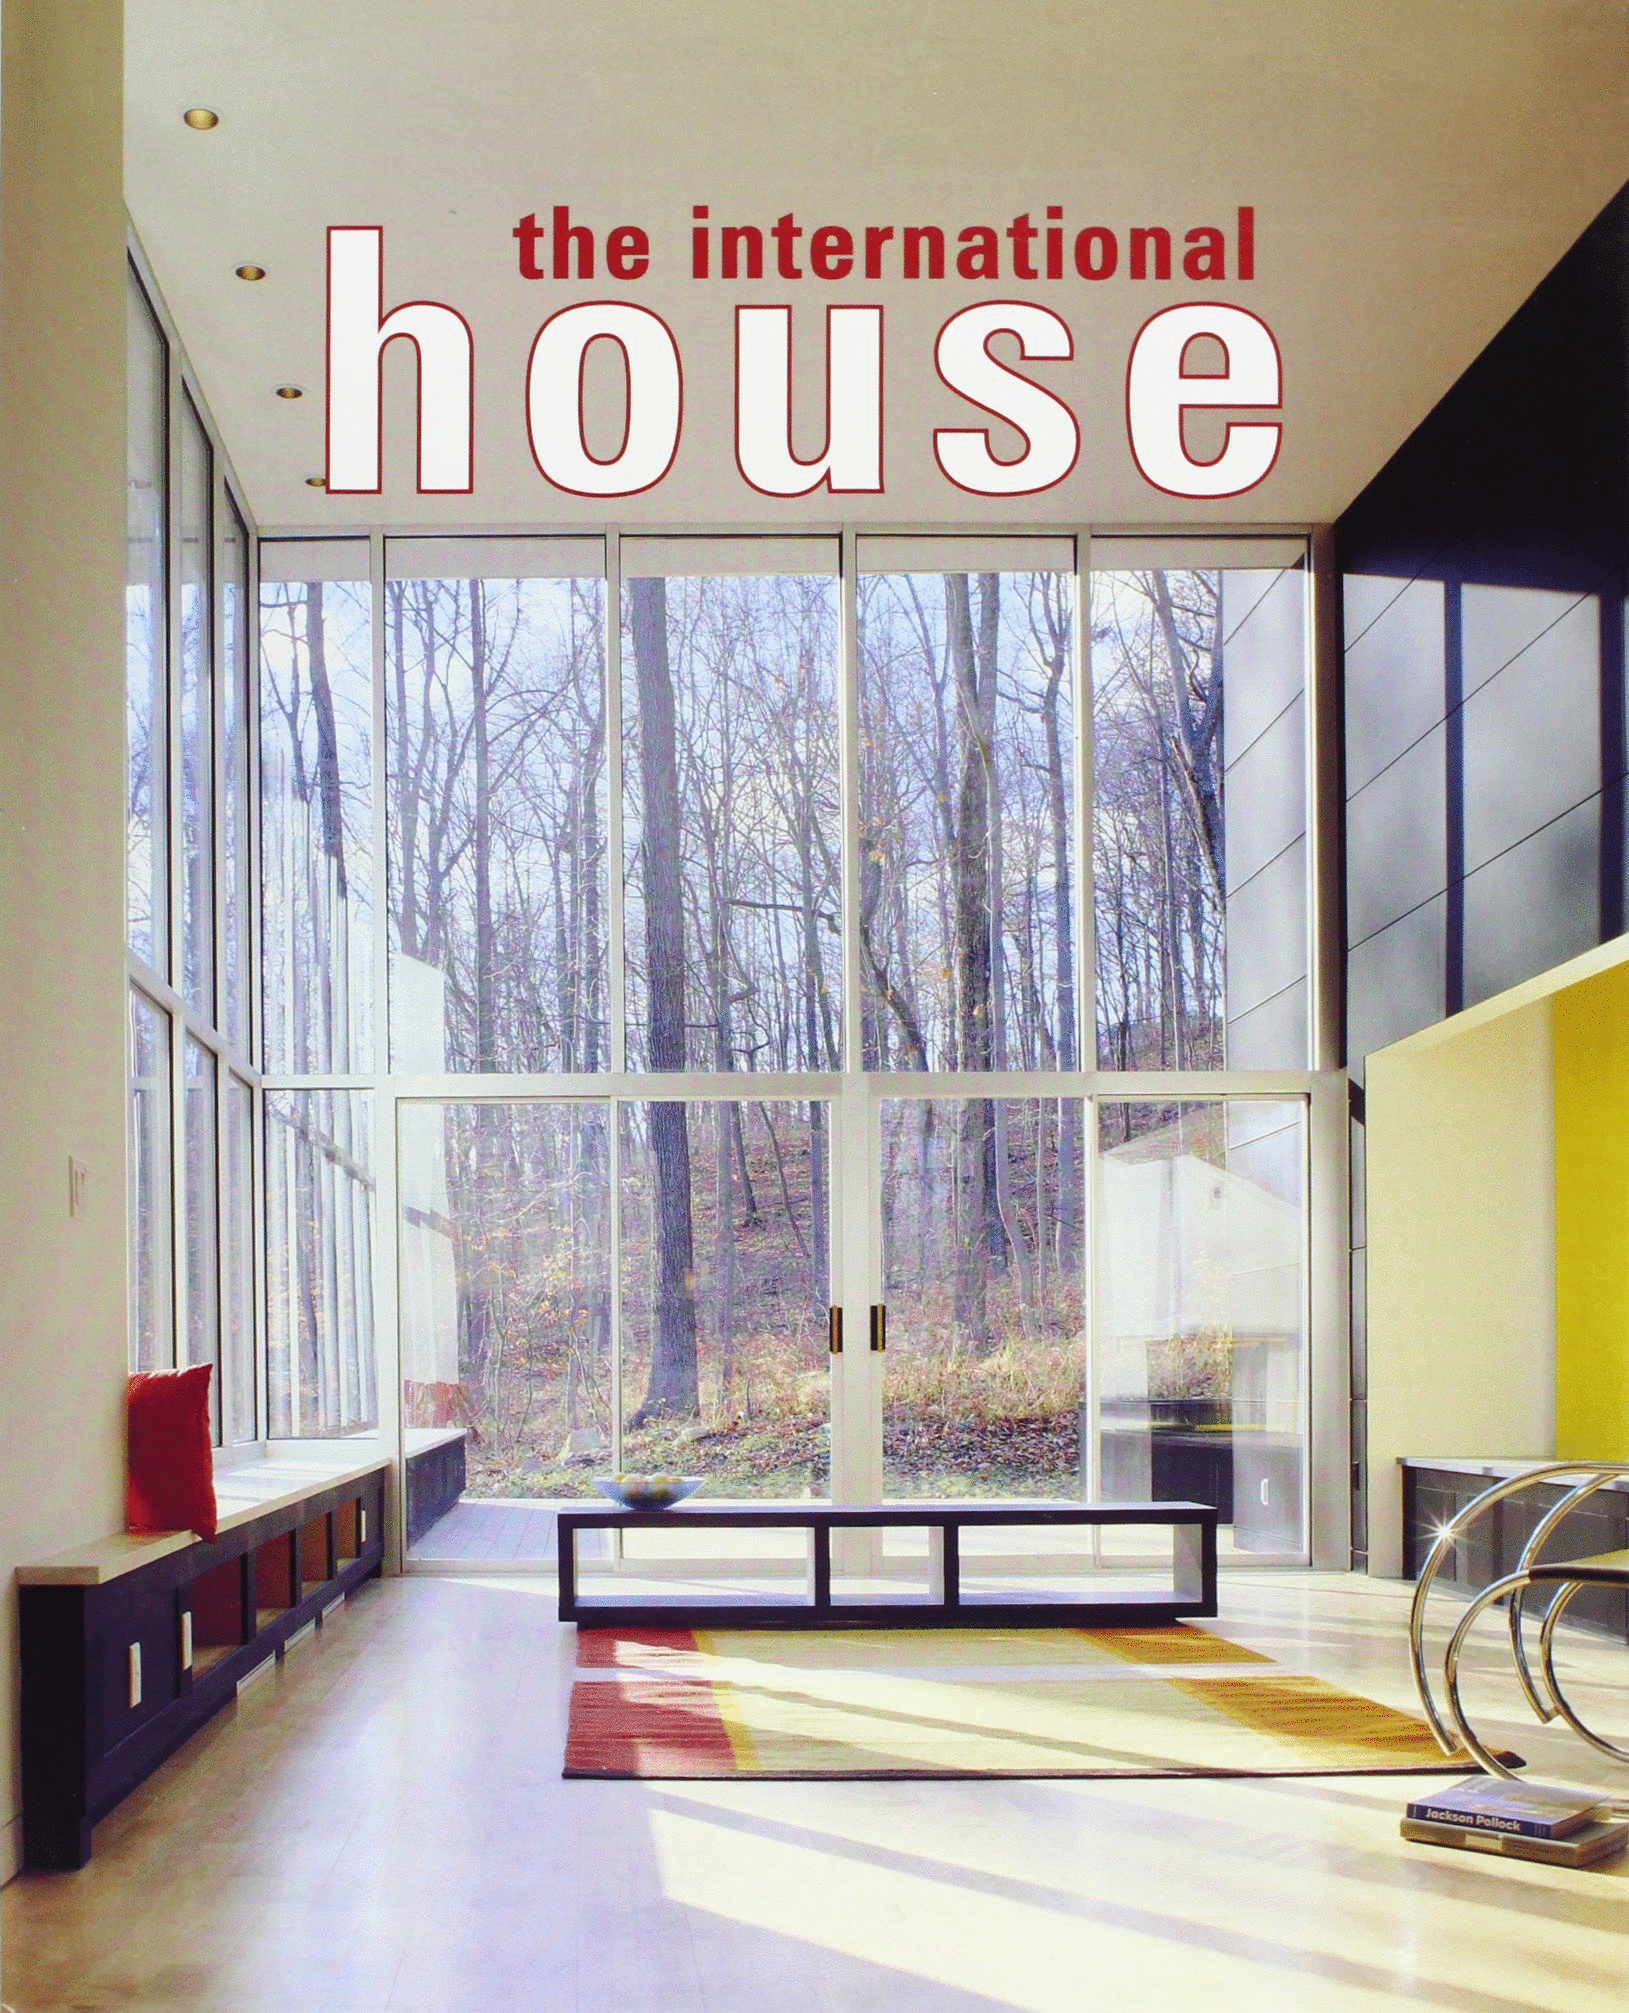 THE INTERNATIONAL HOUSE